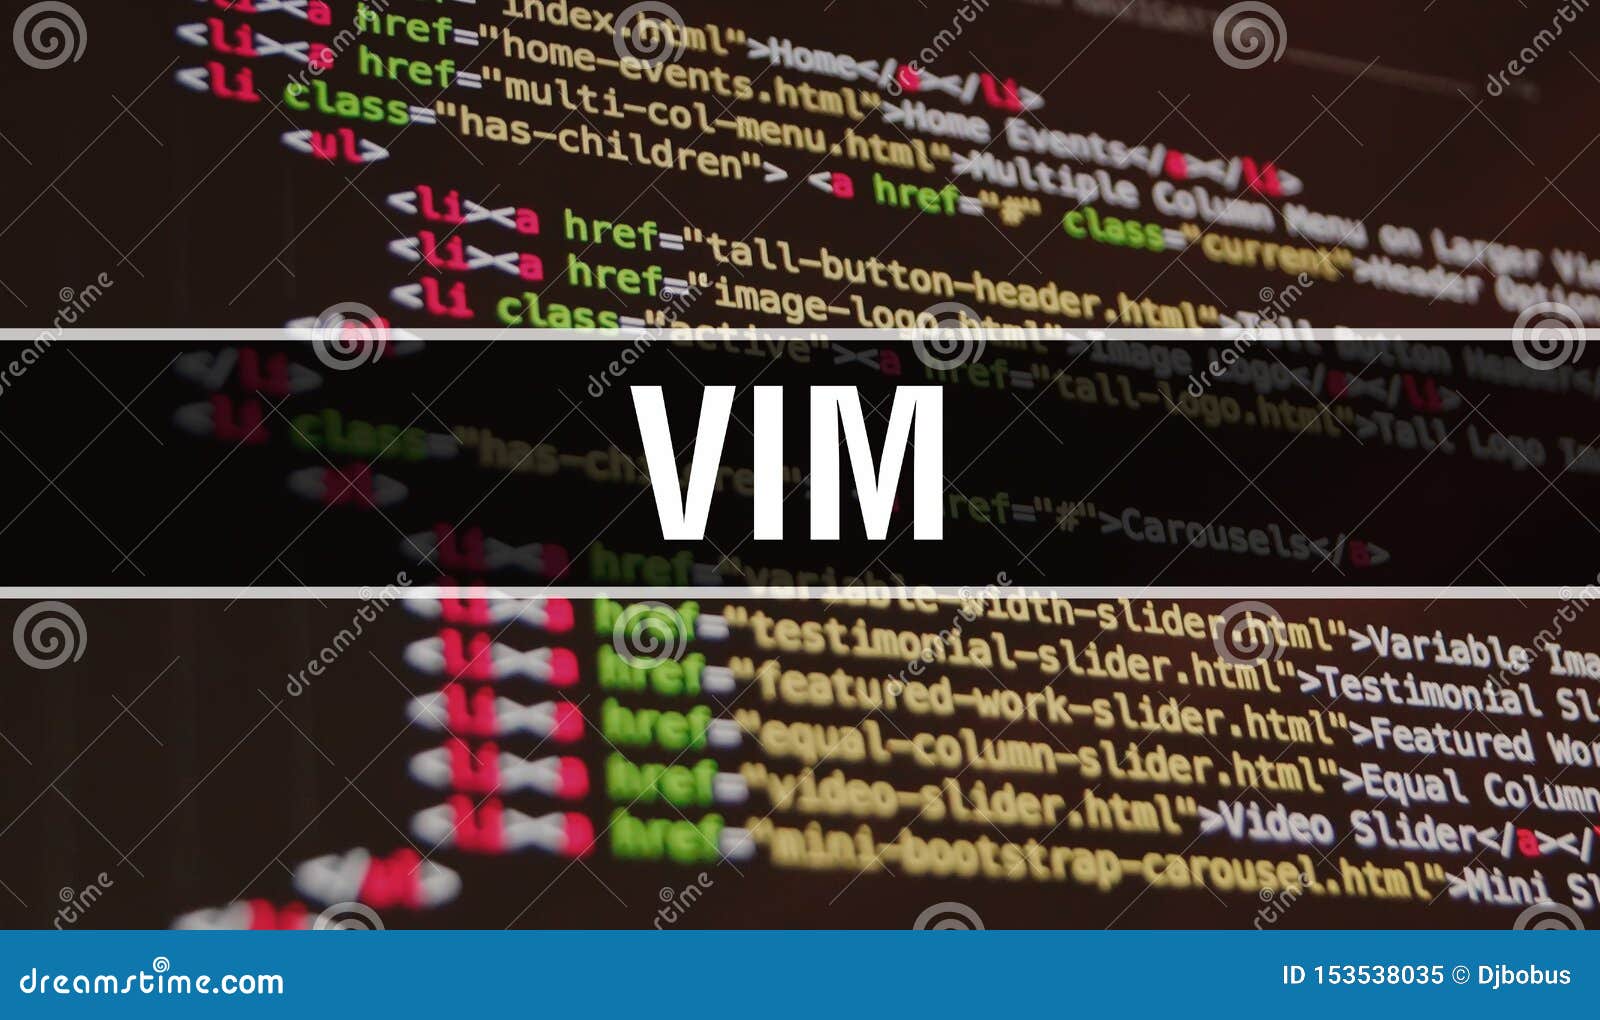 How To Install Vim on Ubuntu